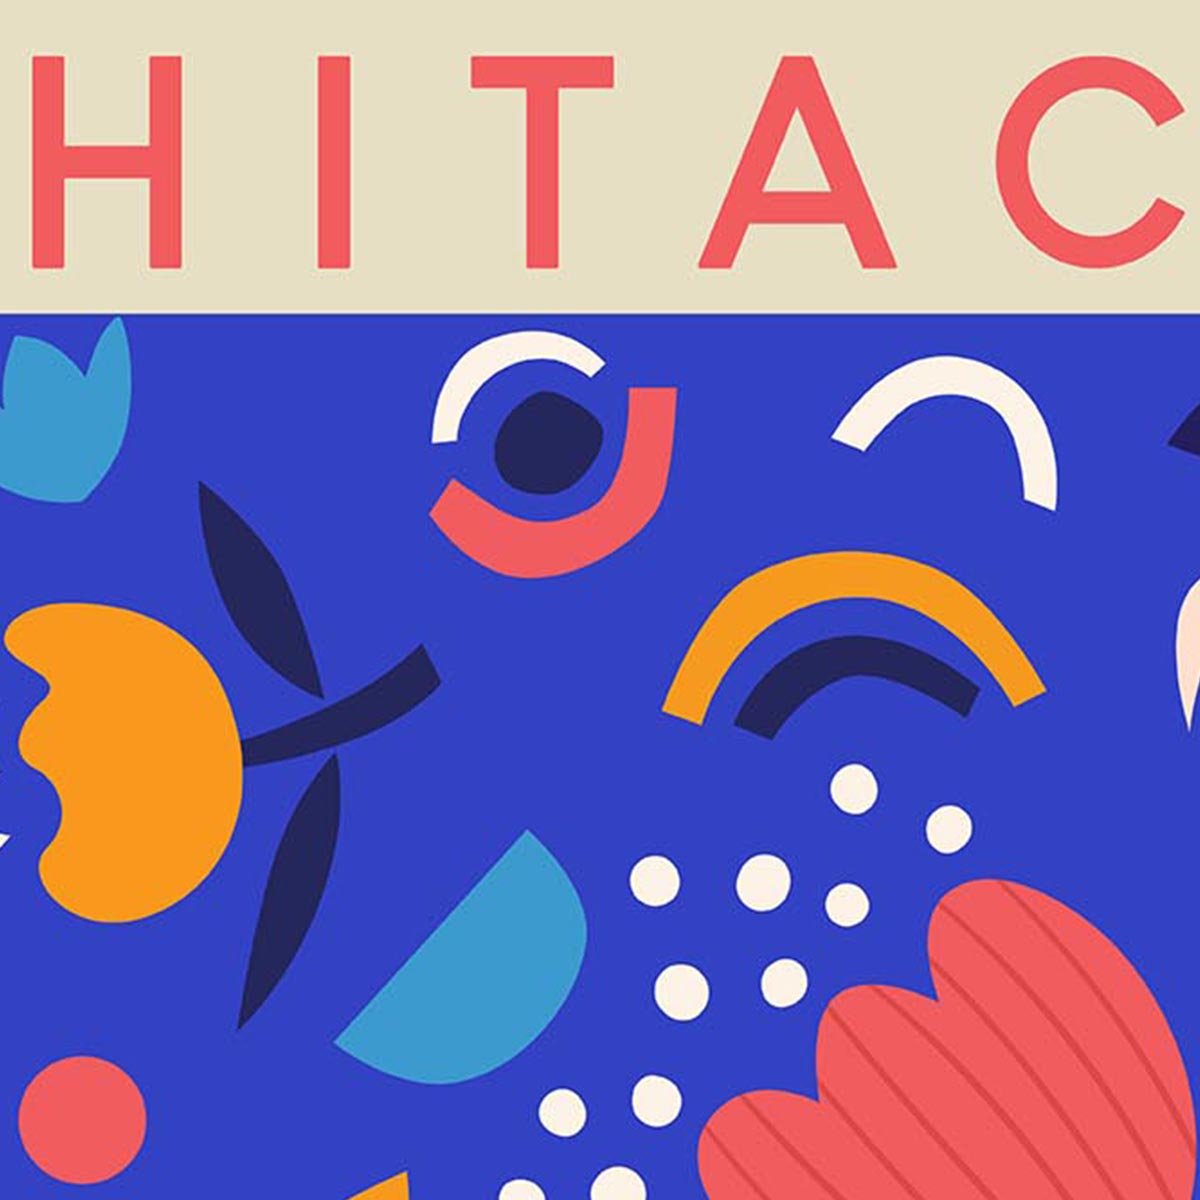 Hitachi Flower Market Poster